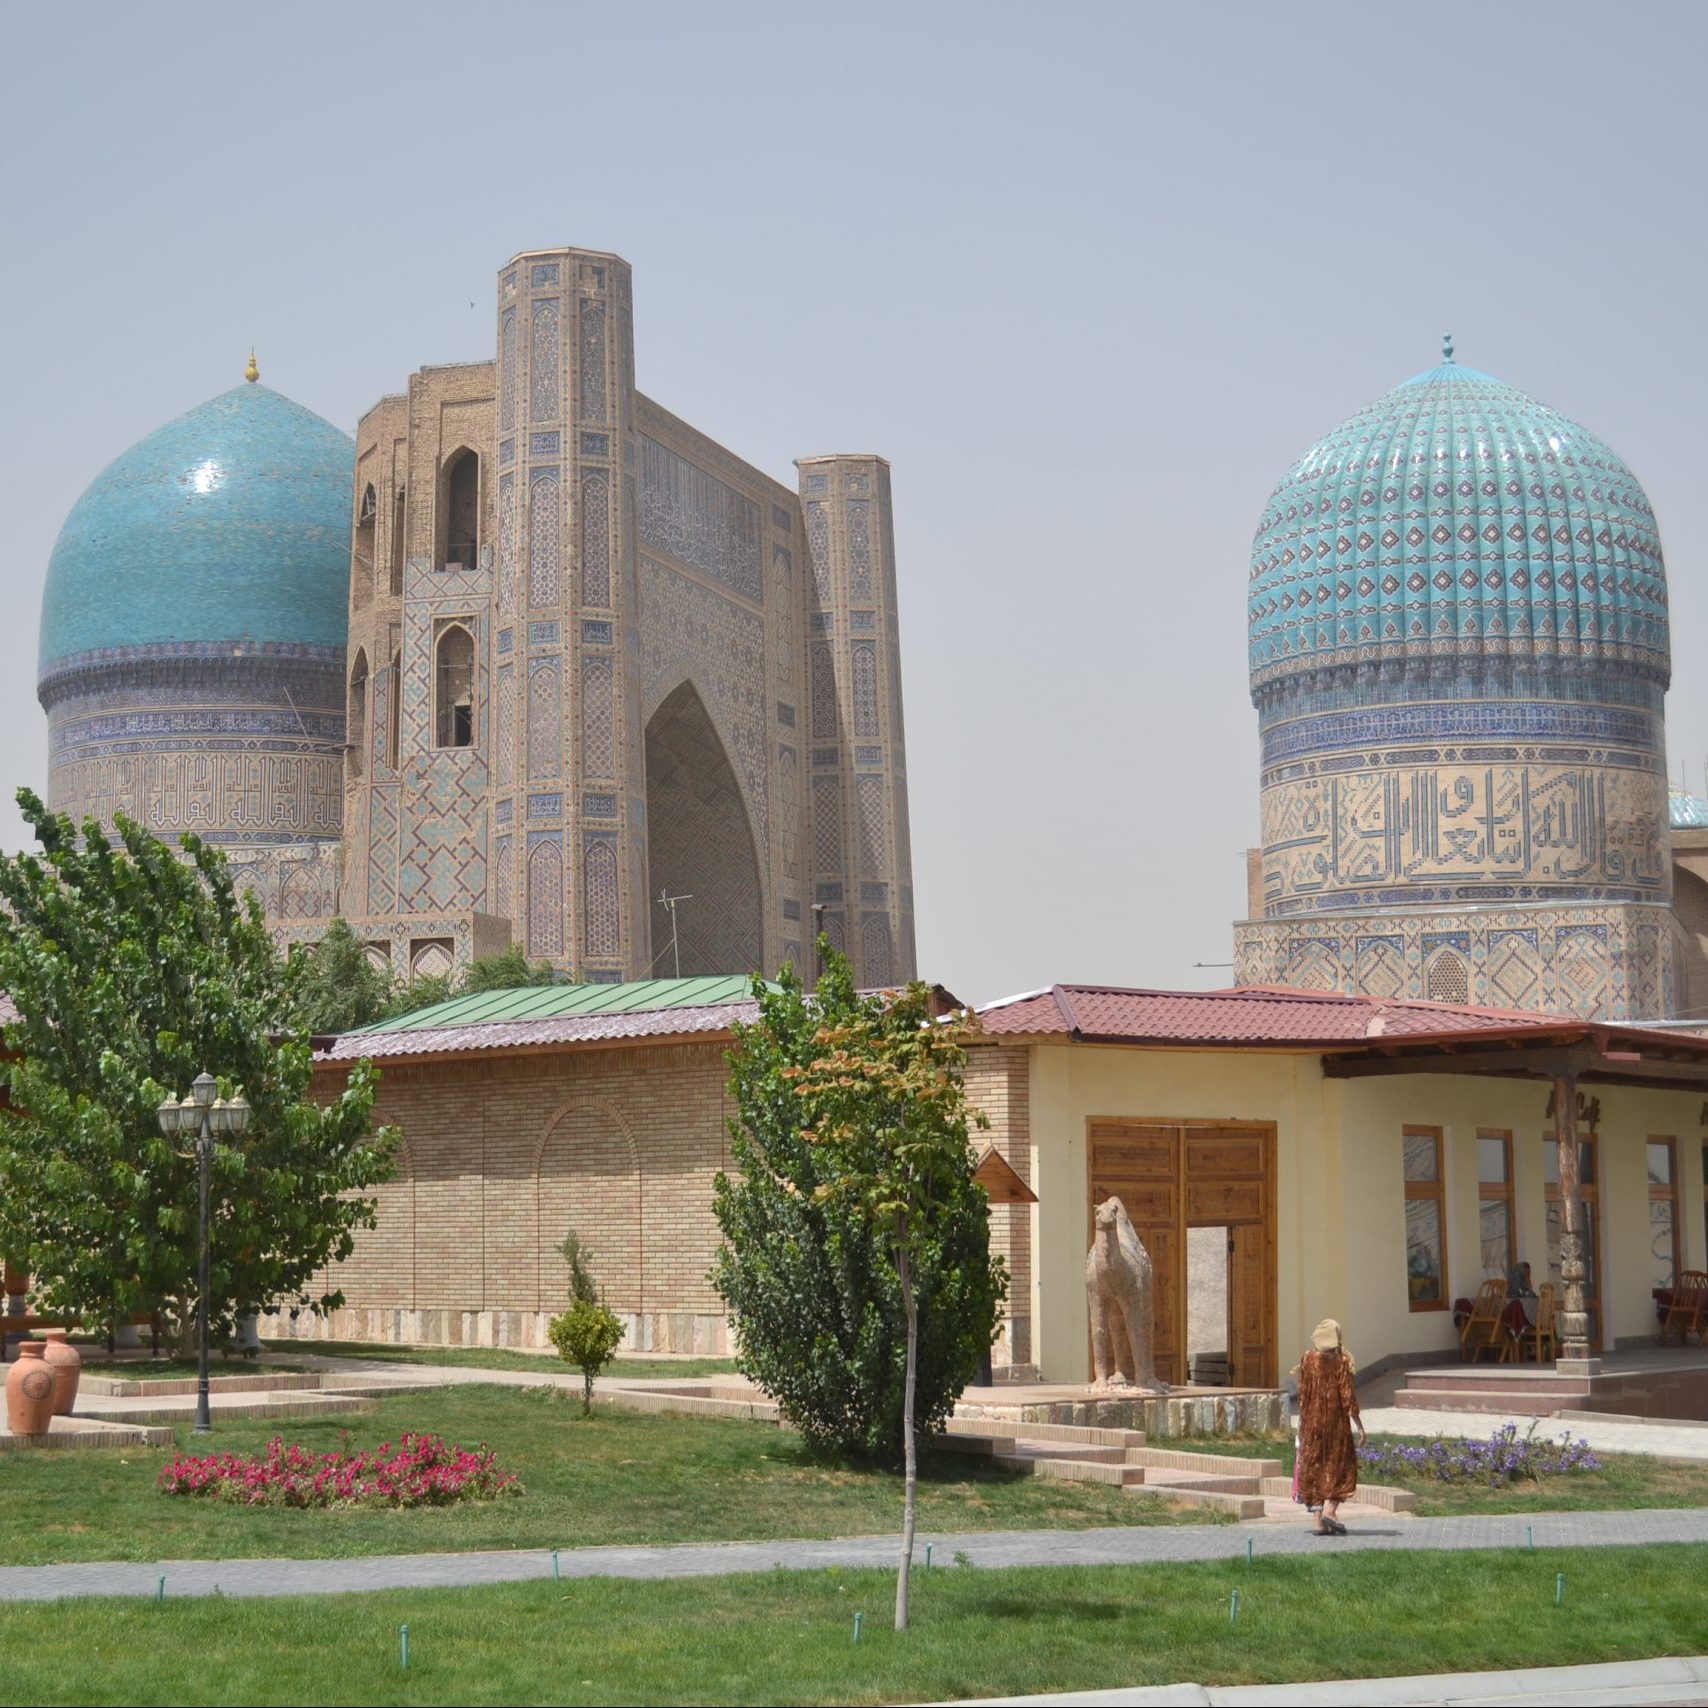 Samarkand (Bibi-Khonum Mosque)